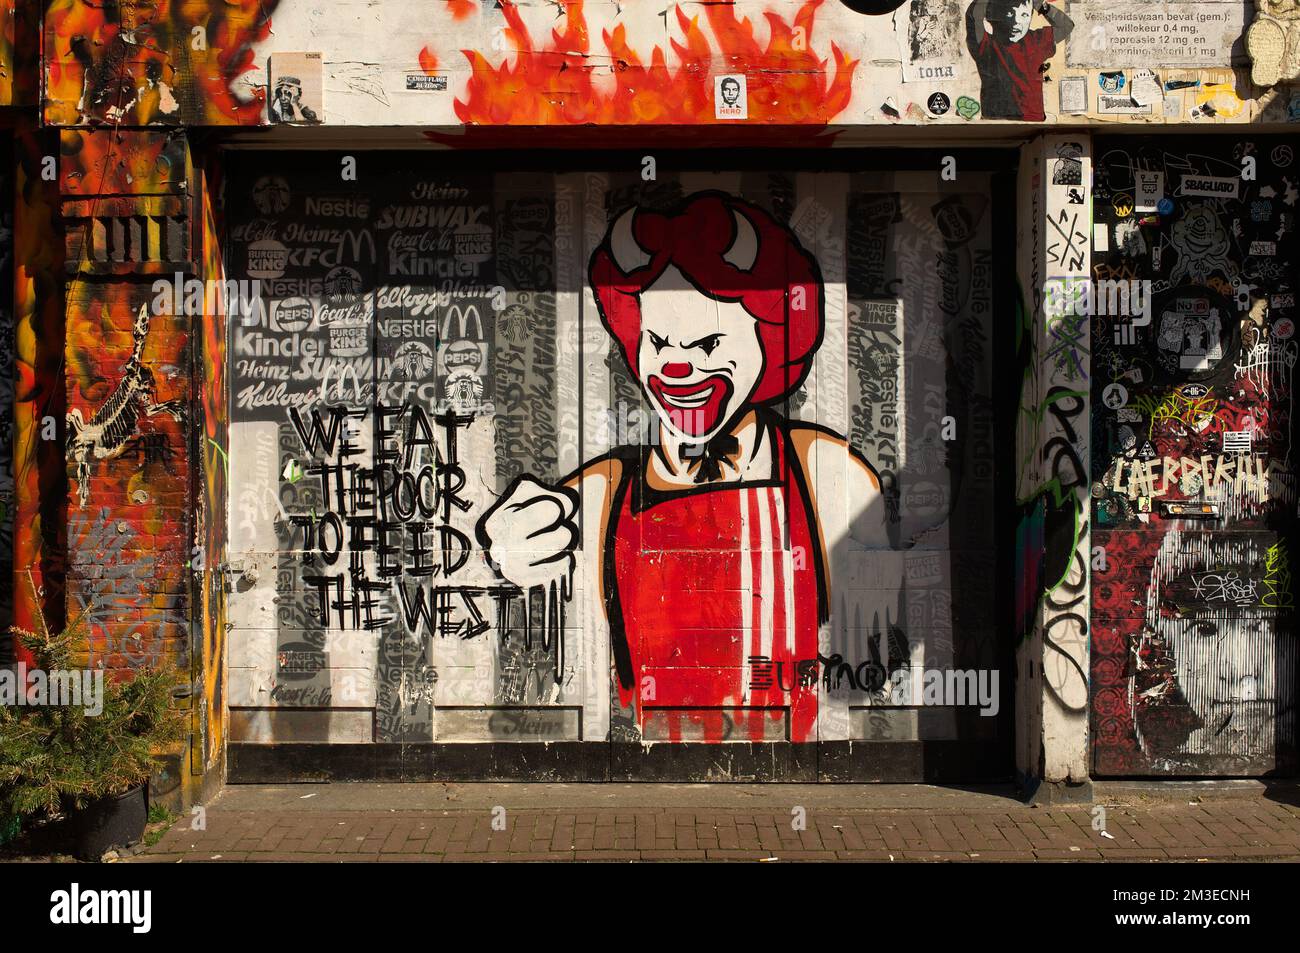 Street art / graffiti à Amsterdam, Hollande, pays-Bas. Banque D'Images